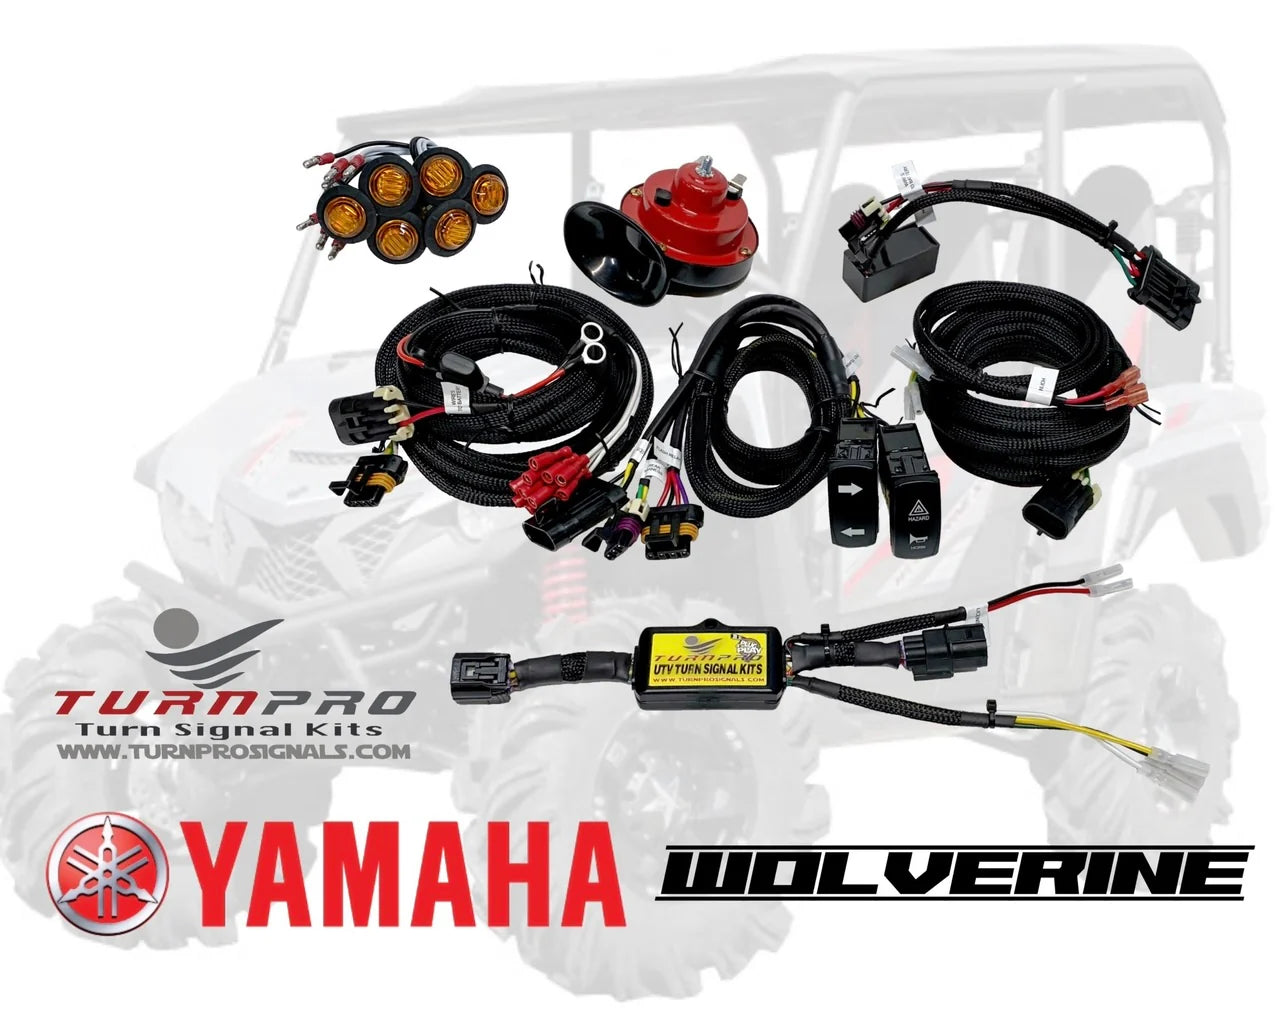 Yamaha Wolverine Models Plug & Play Signal System